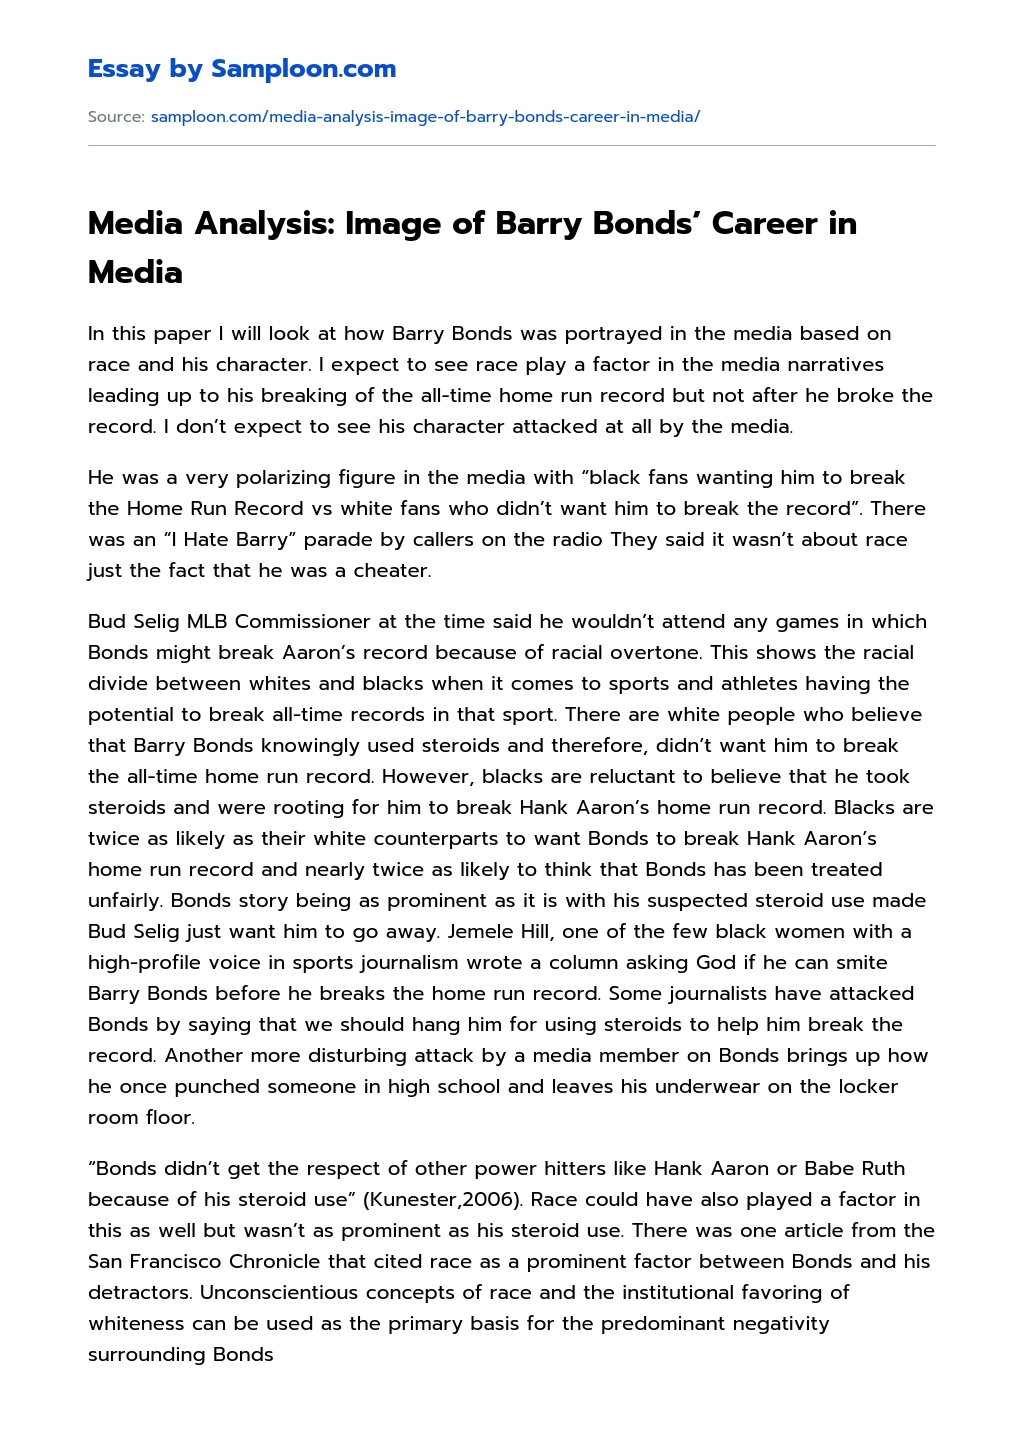 Media Analysis: Image of Barry Bonds’ Career in Media essay